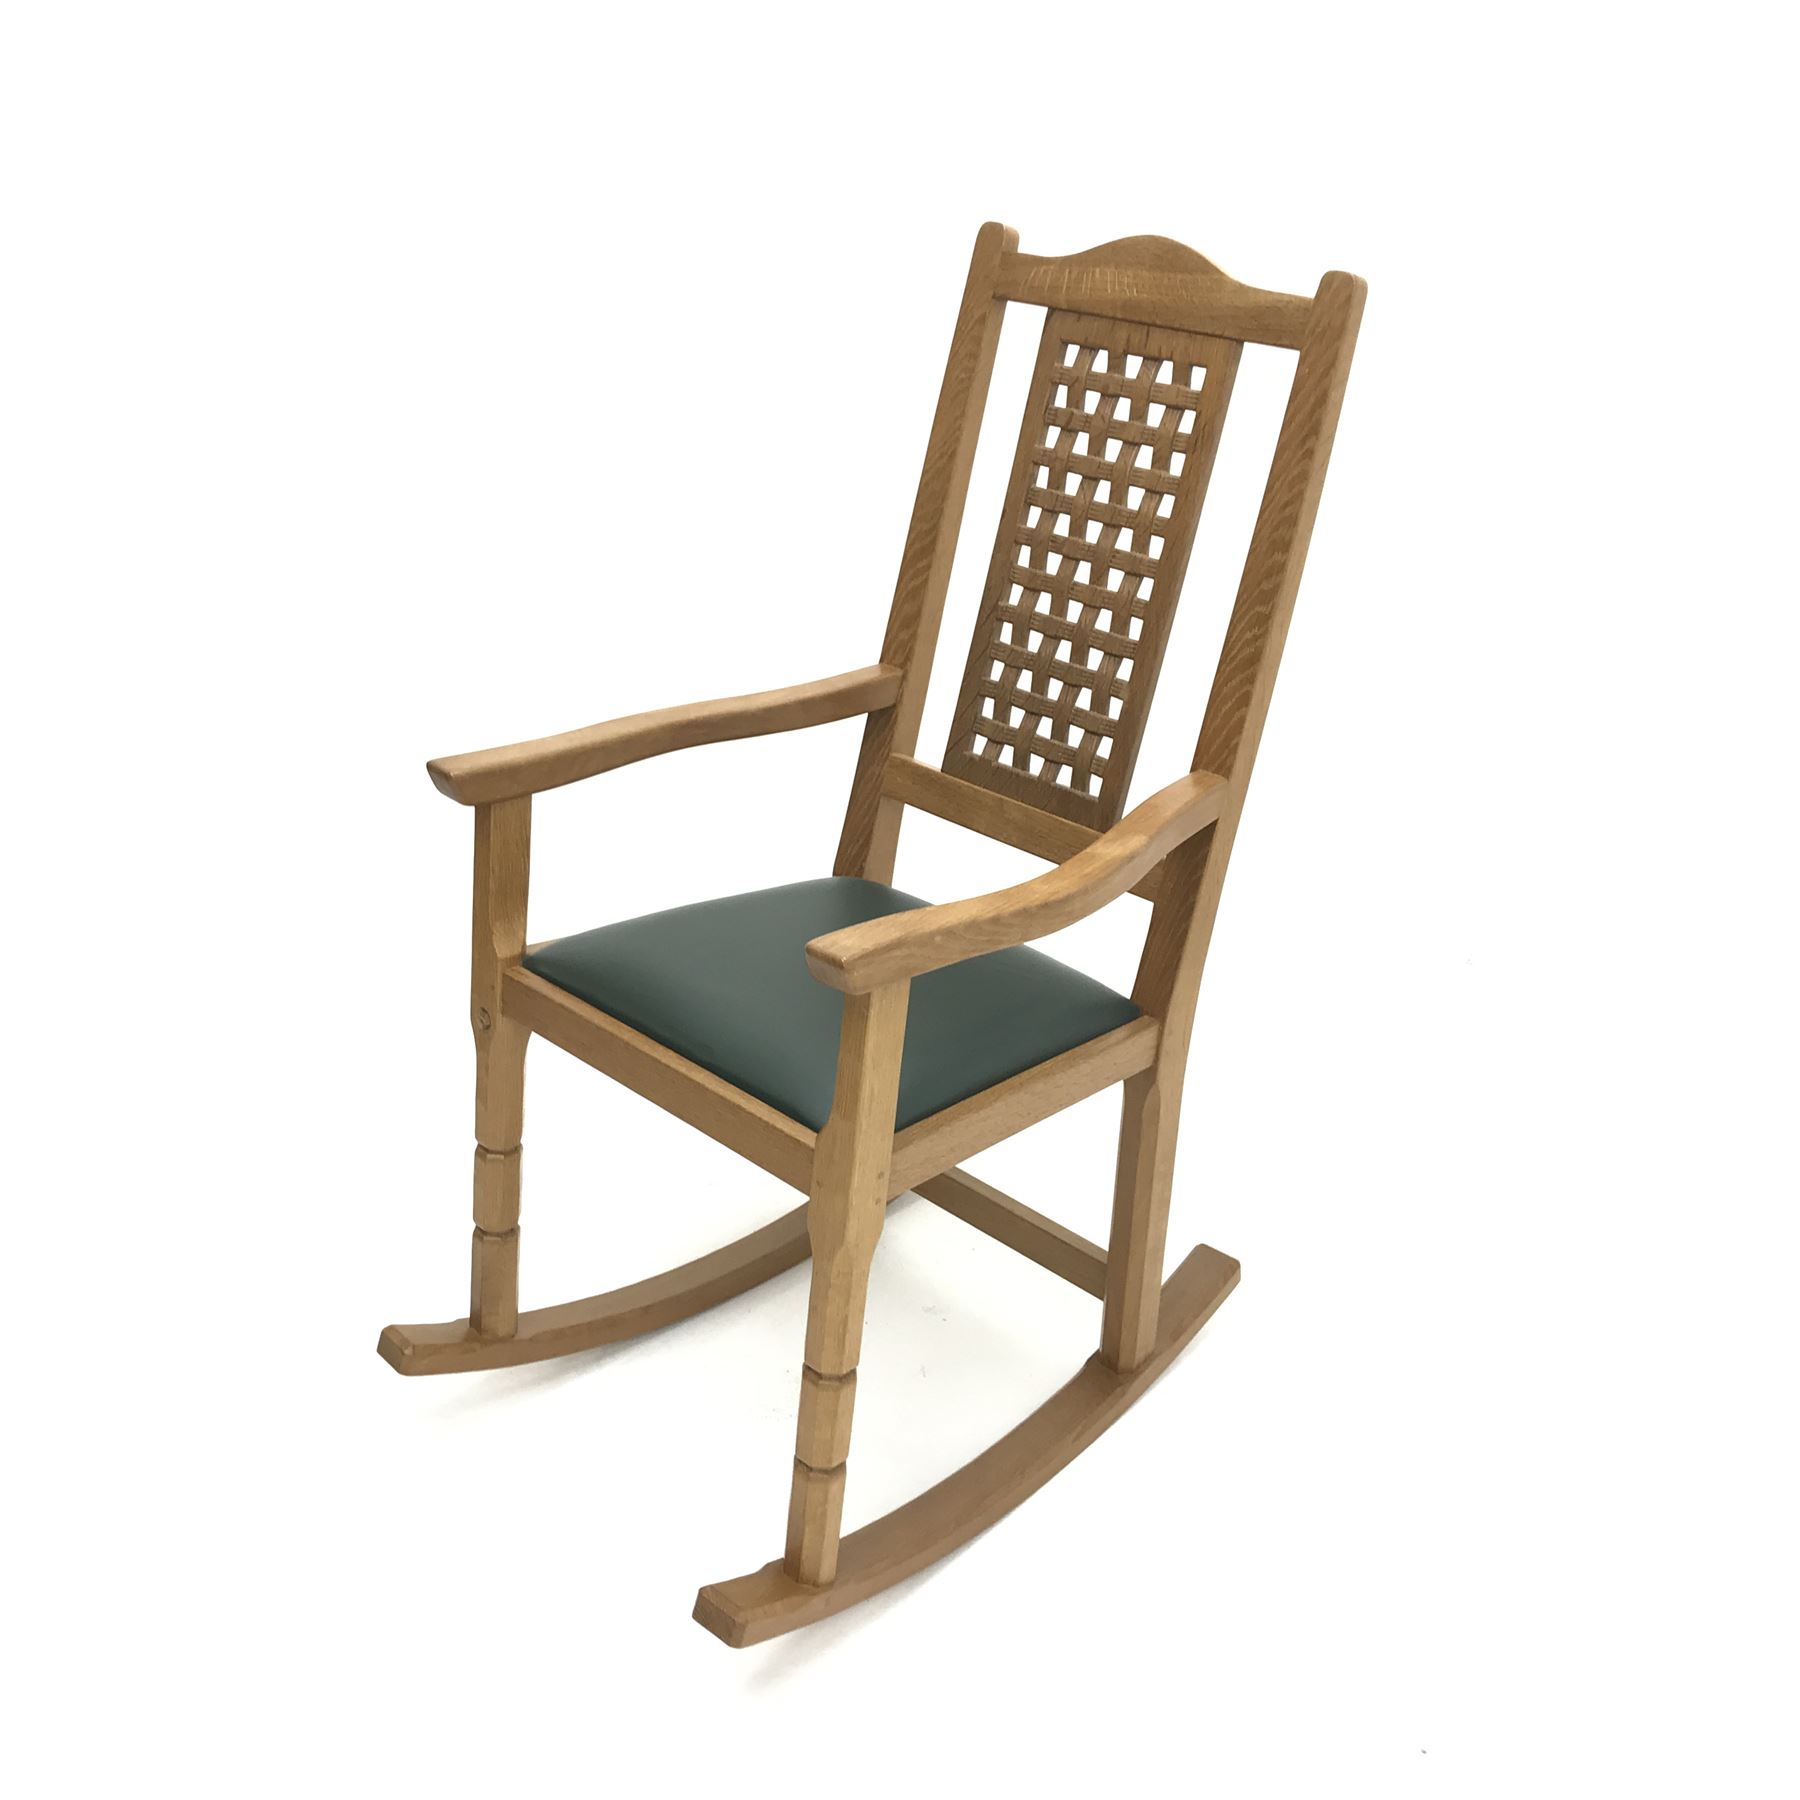 'Foxman' oak rocking chair - Image 2 of 6